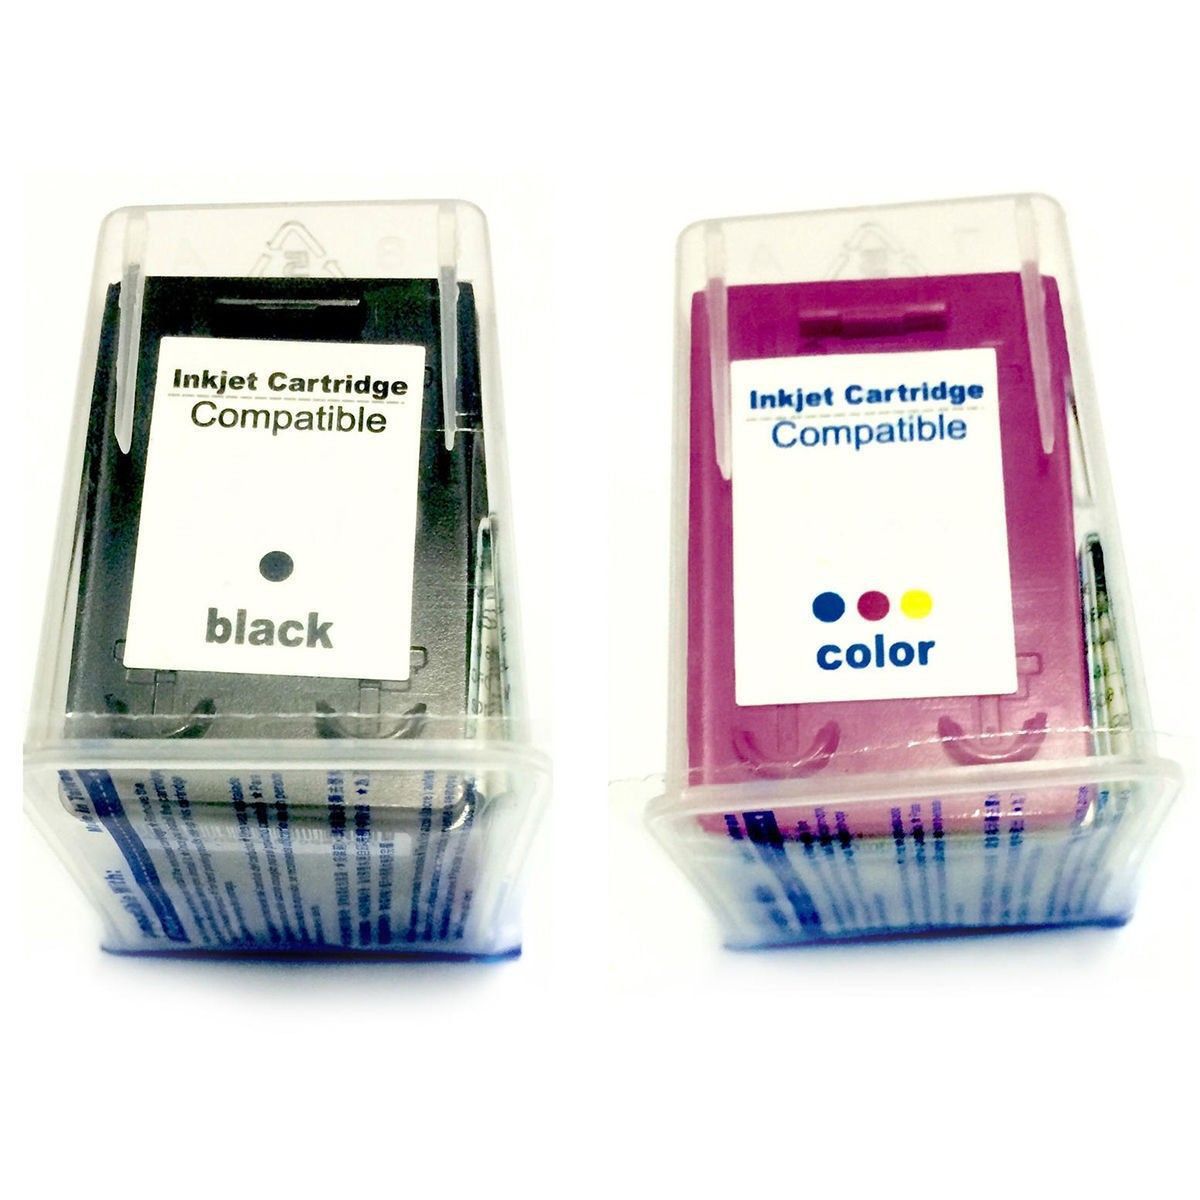 Compatível: Kit Colorido de Cartucho de Tinta 122xl 122 para Impressora HP 1000 1050 1055 2000 2050 3000 3050a